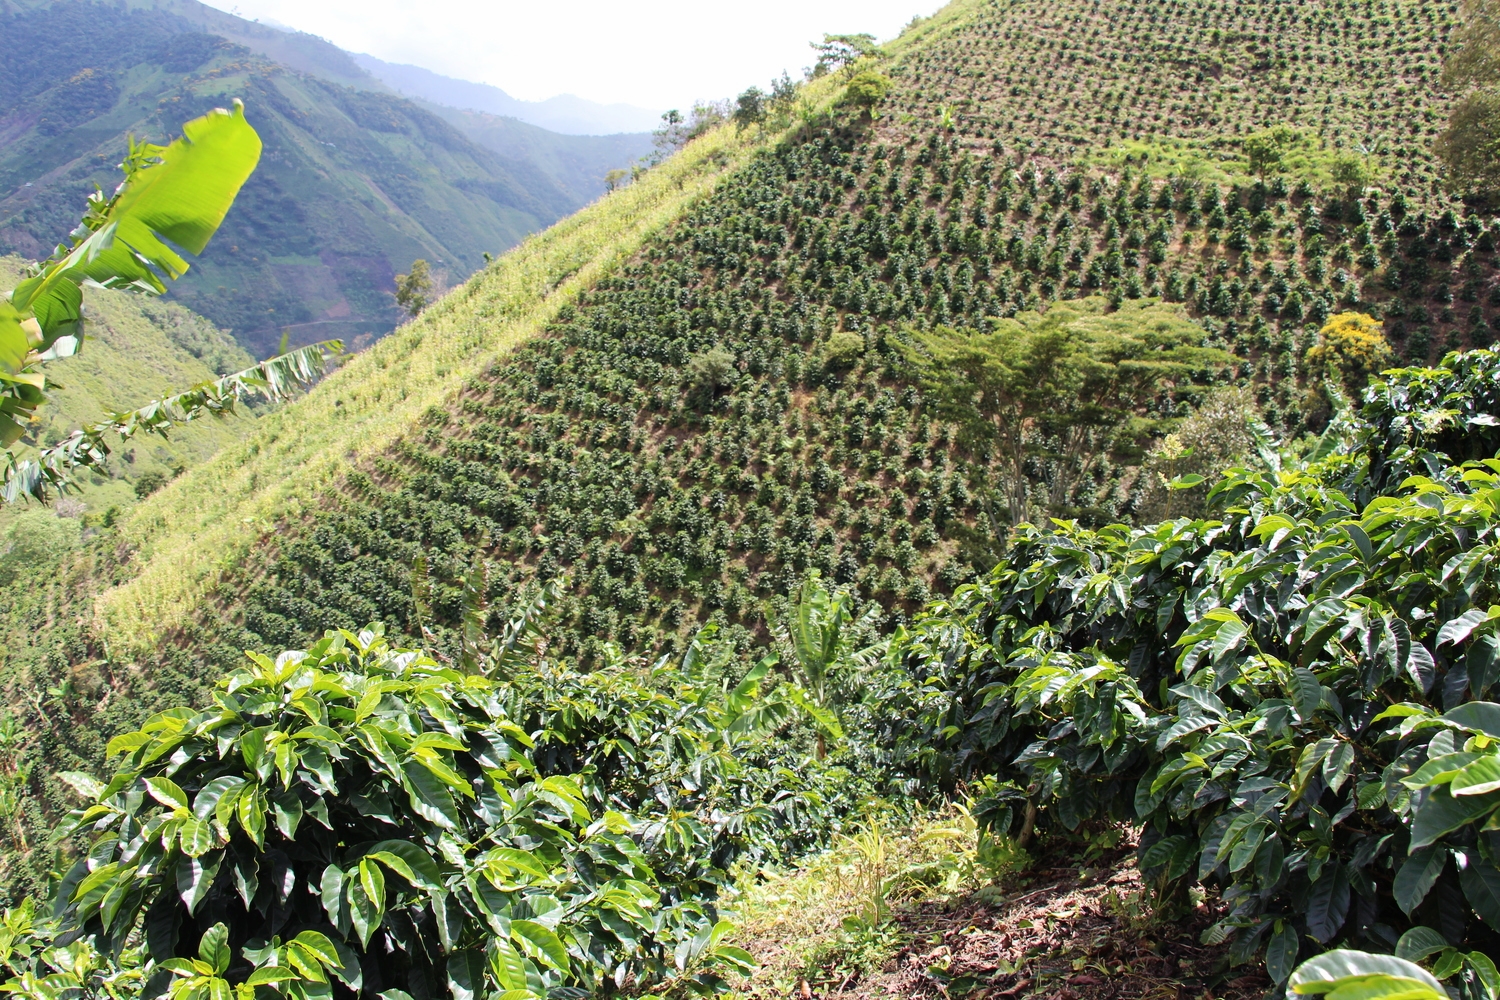 Coffee is cultivated on very steep hills - Finca Buenavista